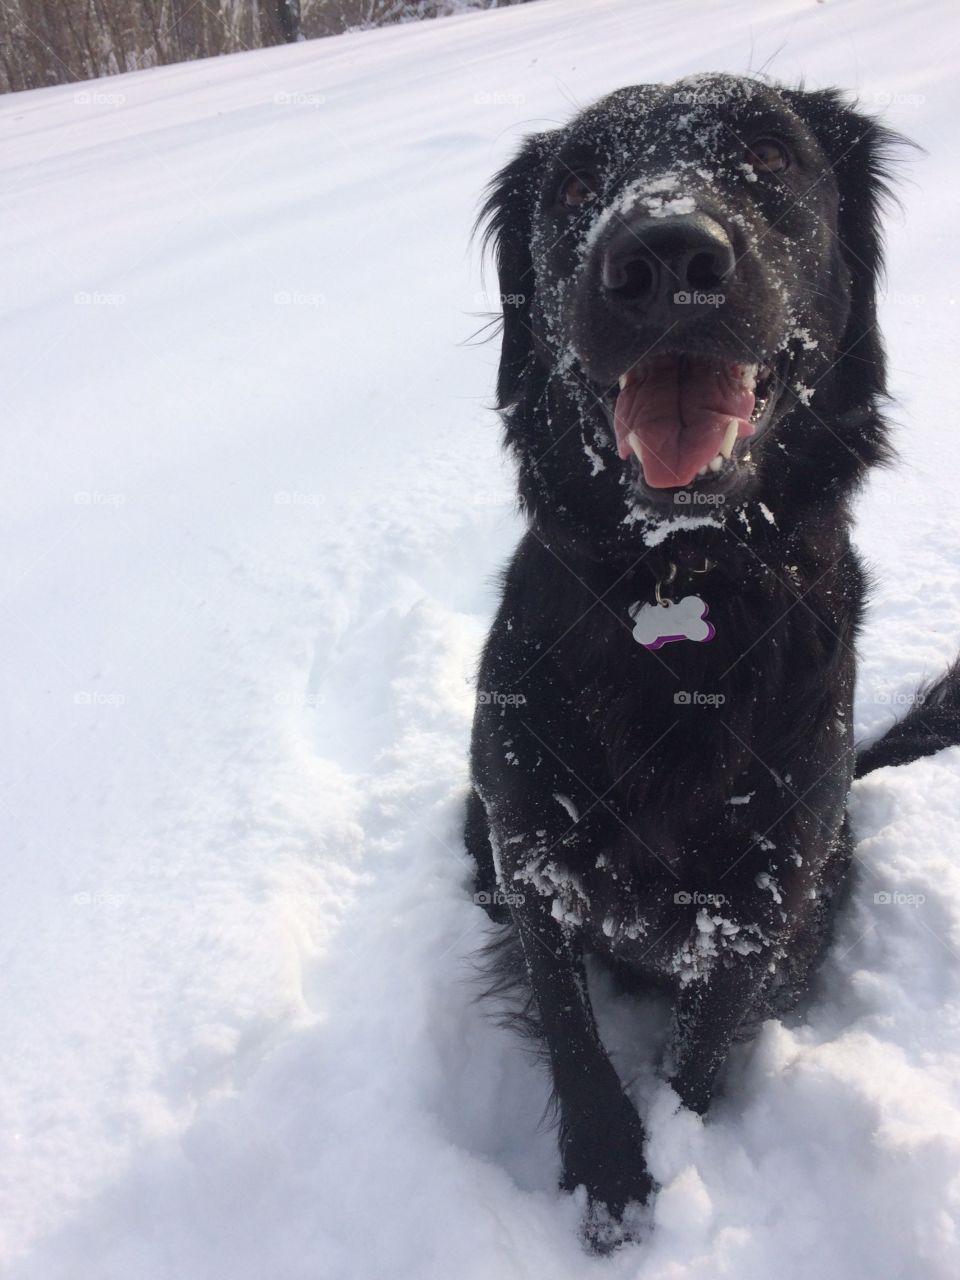 mia loves the snow 